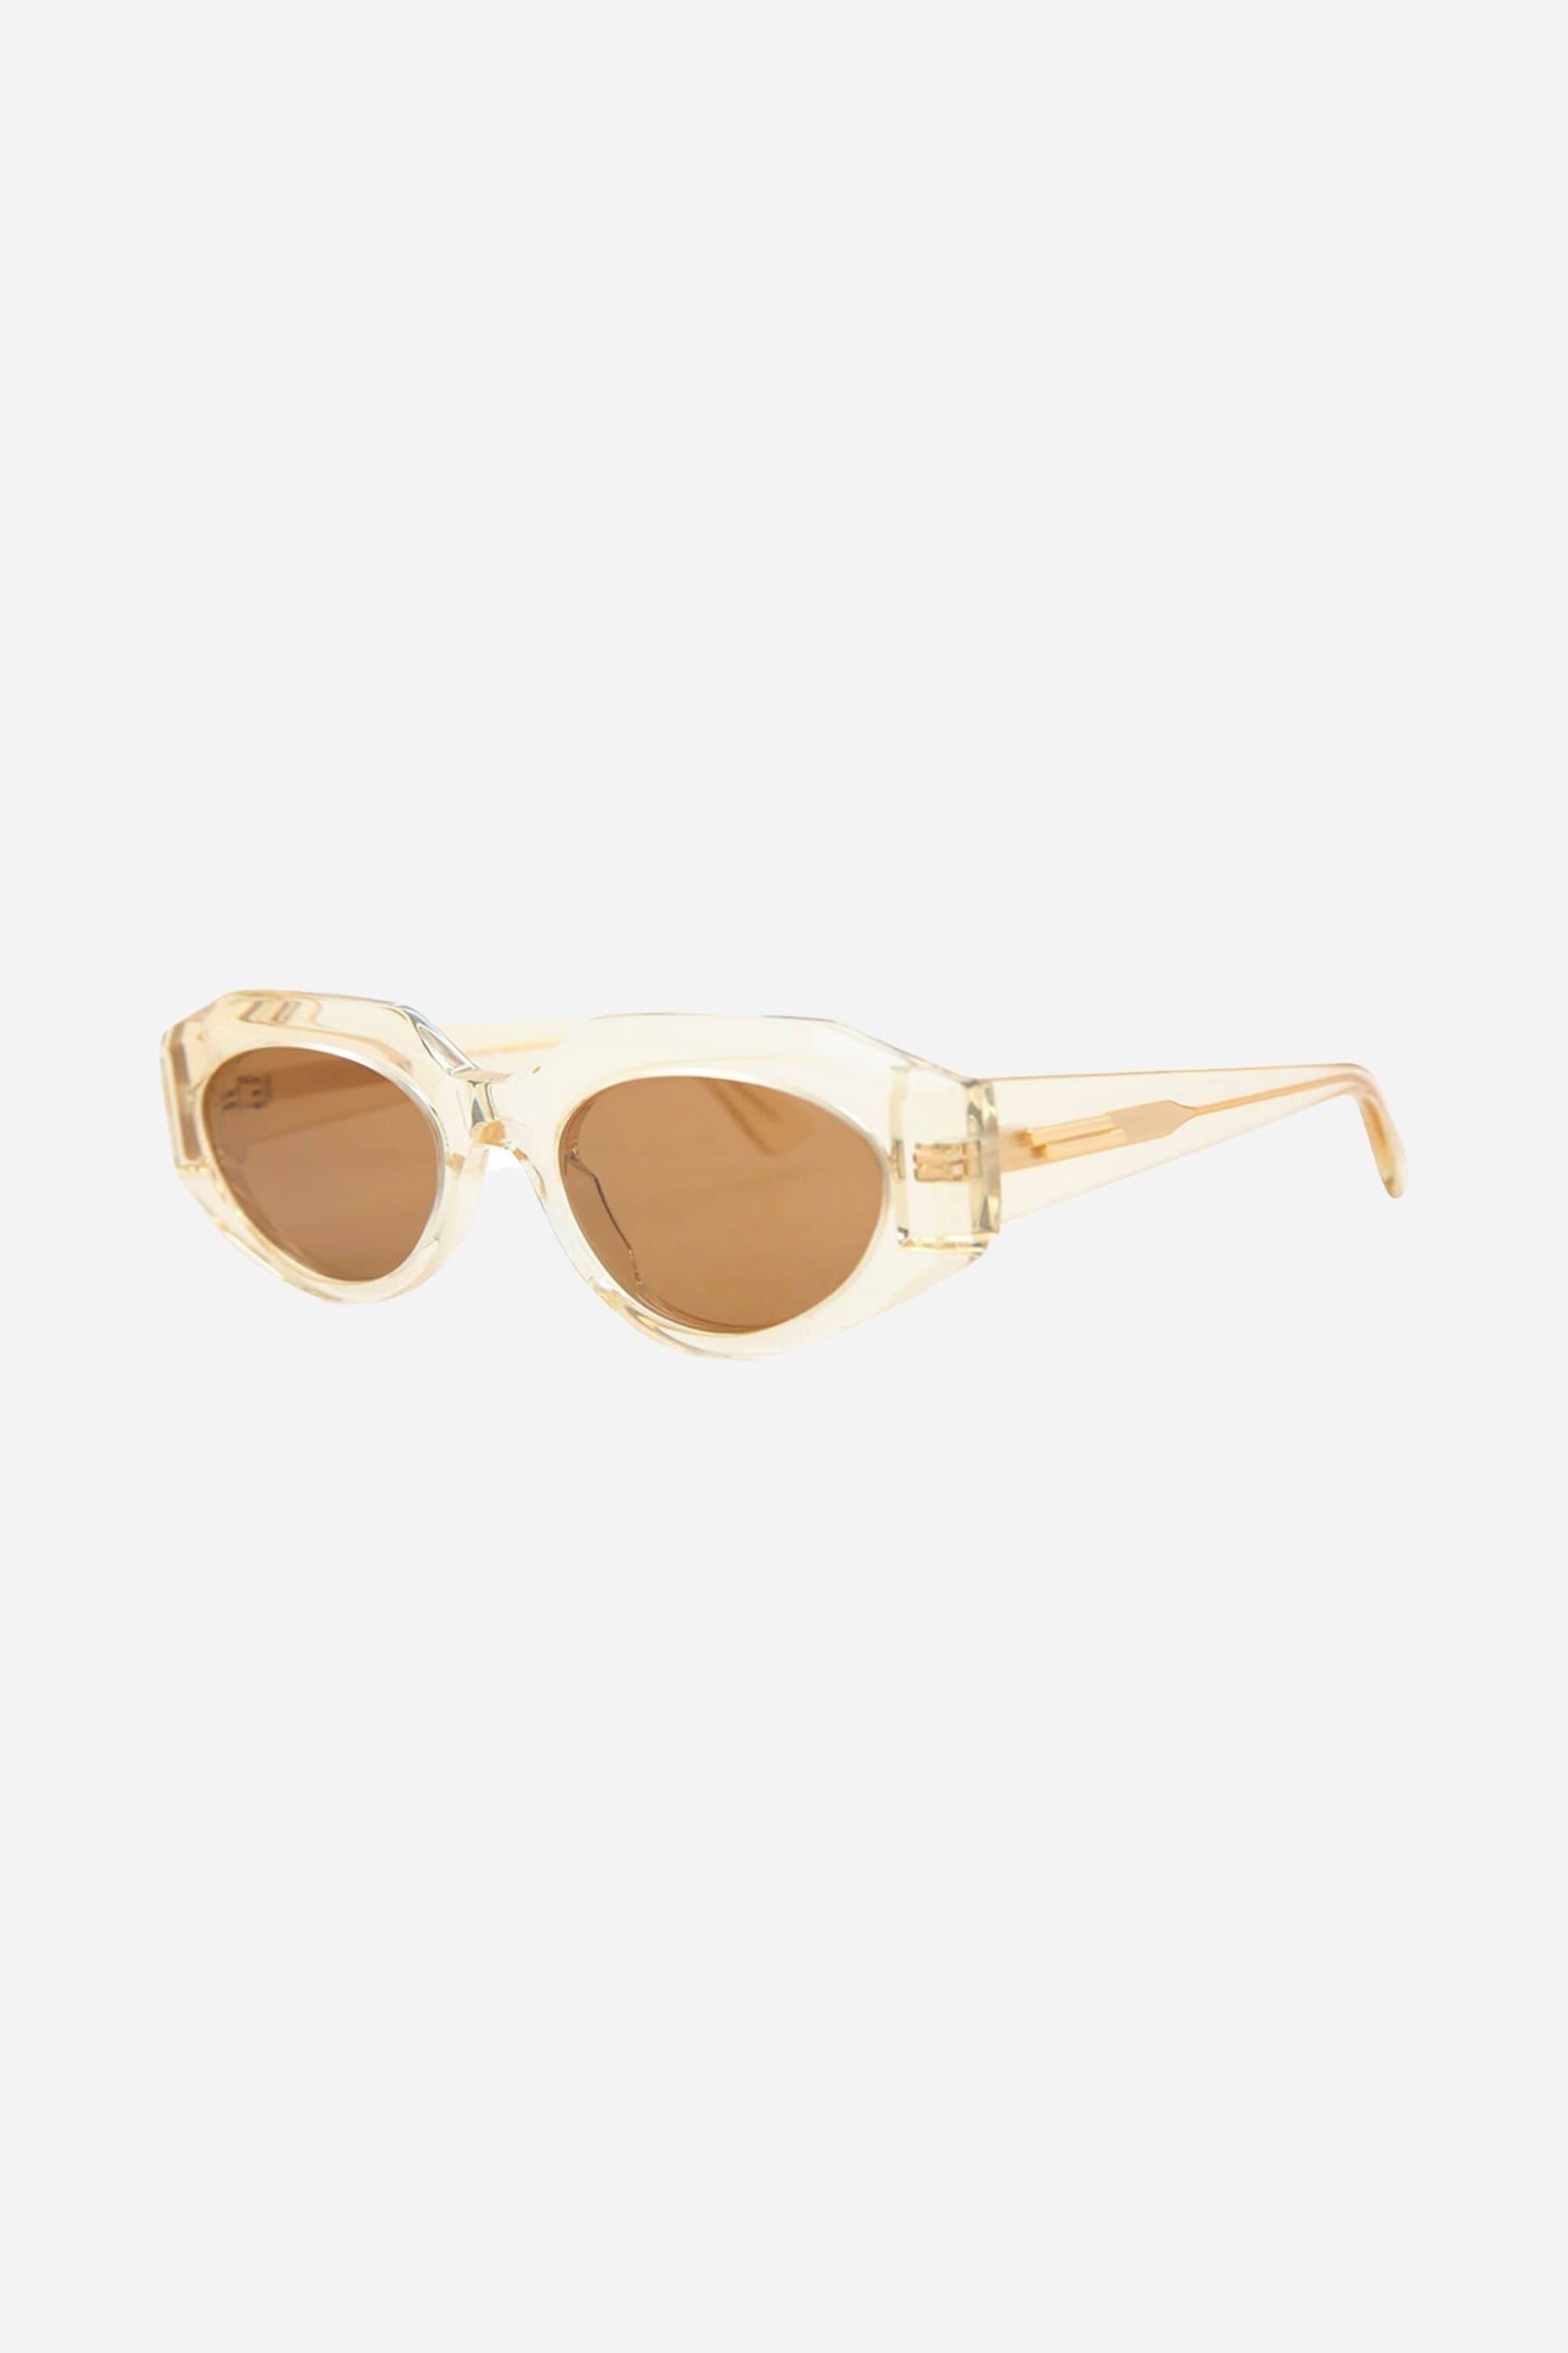 Bottega Veneta bold oval femenine crystal sunglasses - Eyewear Club